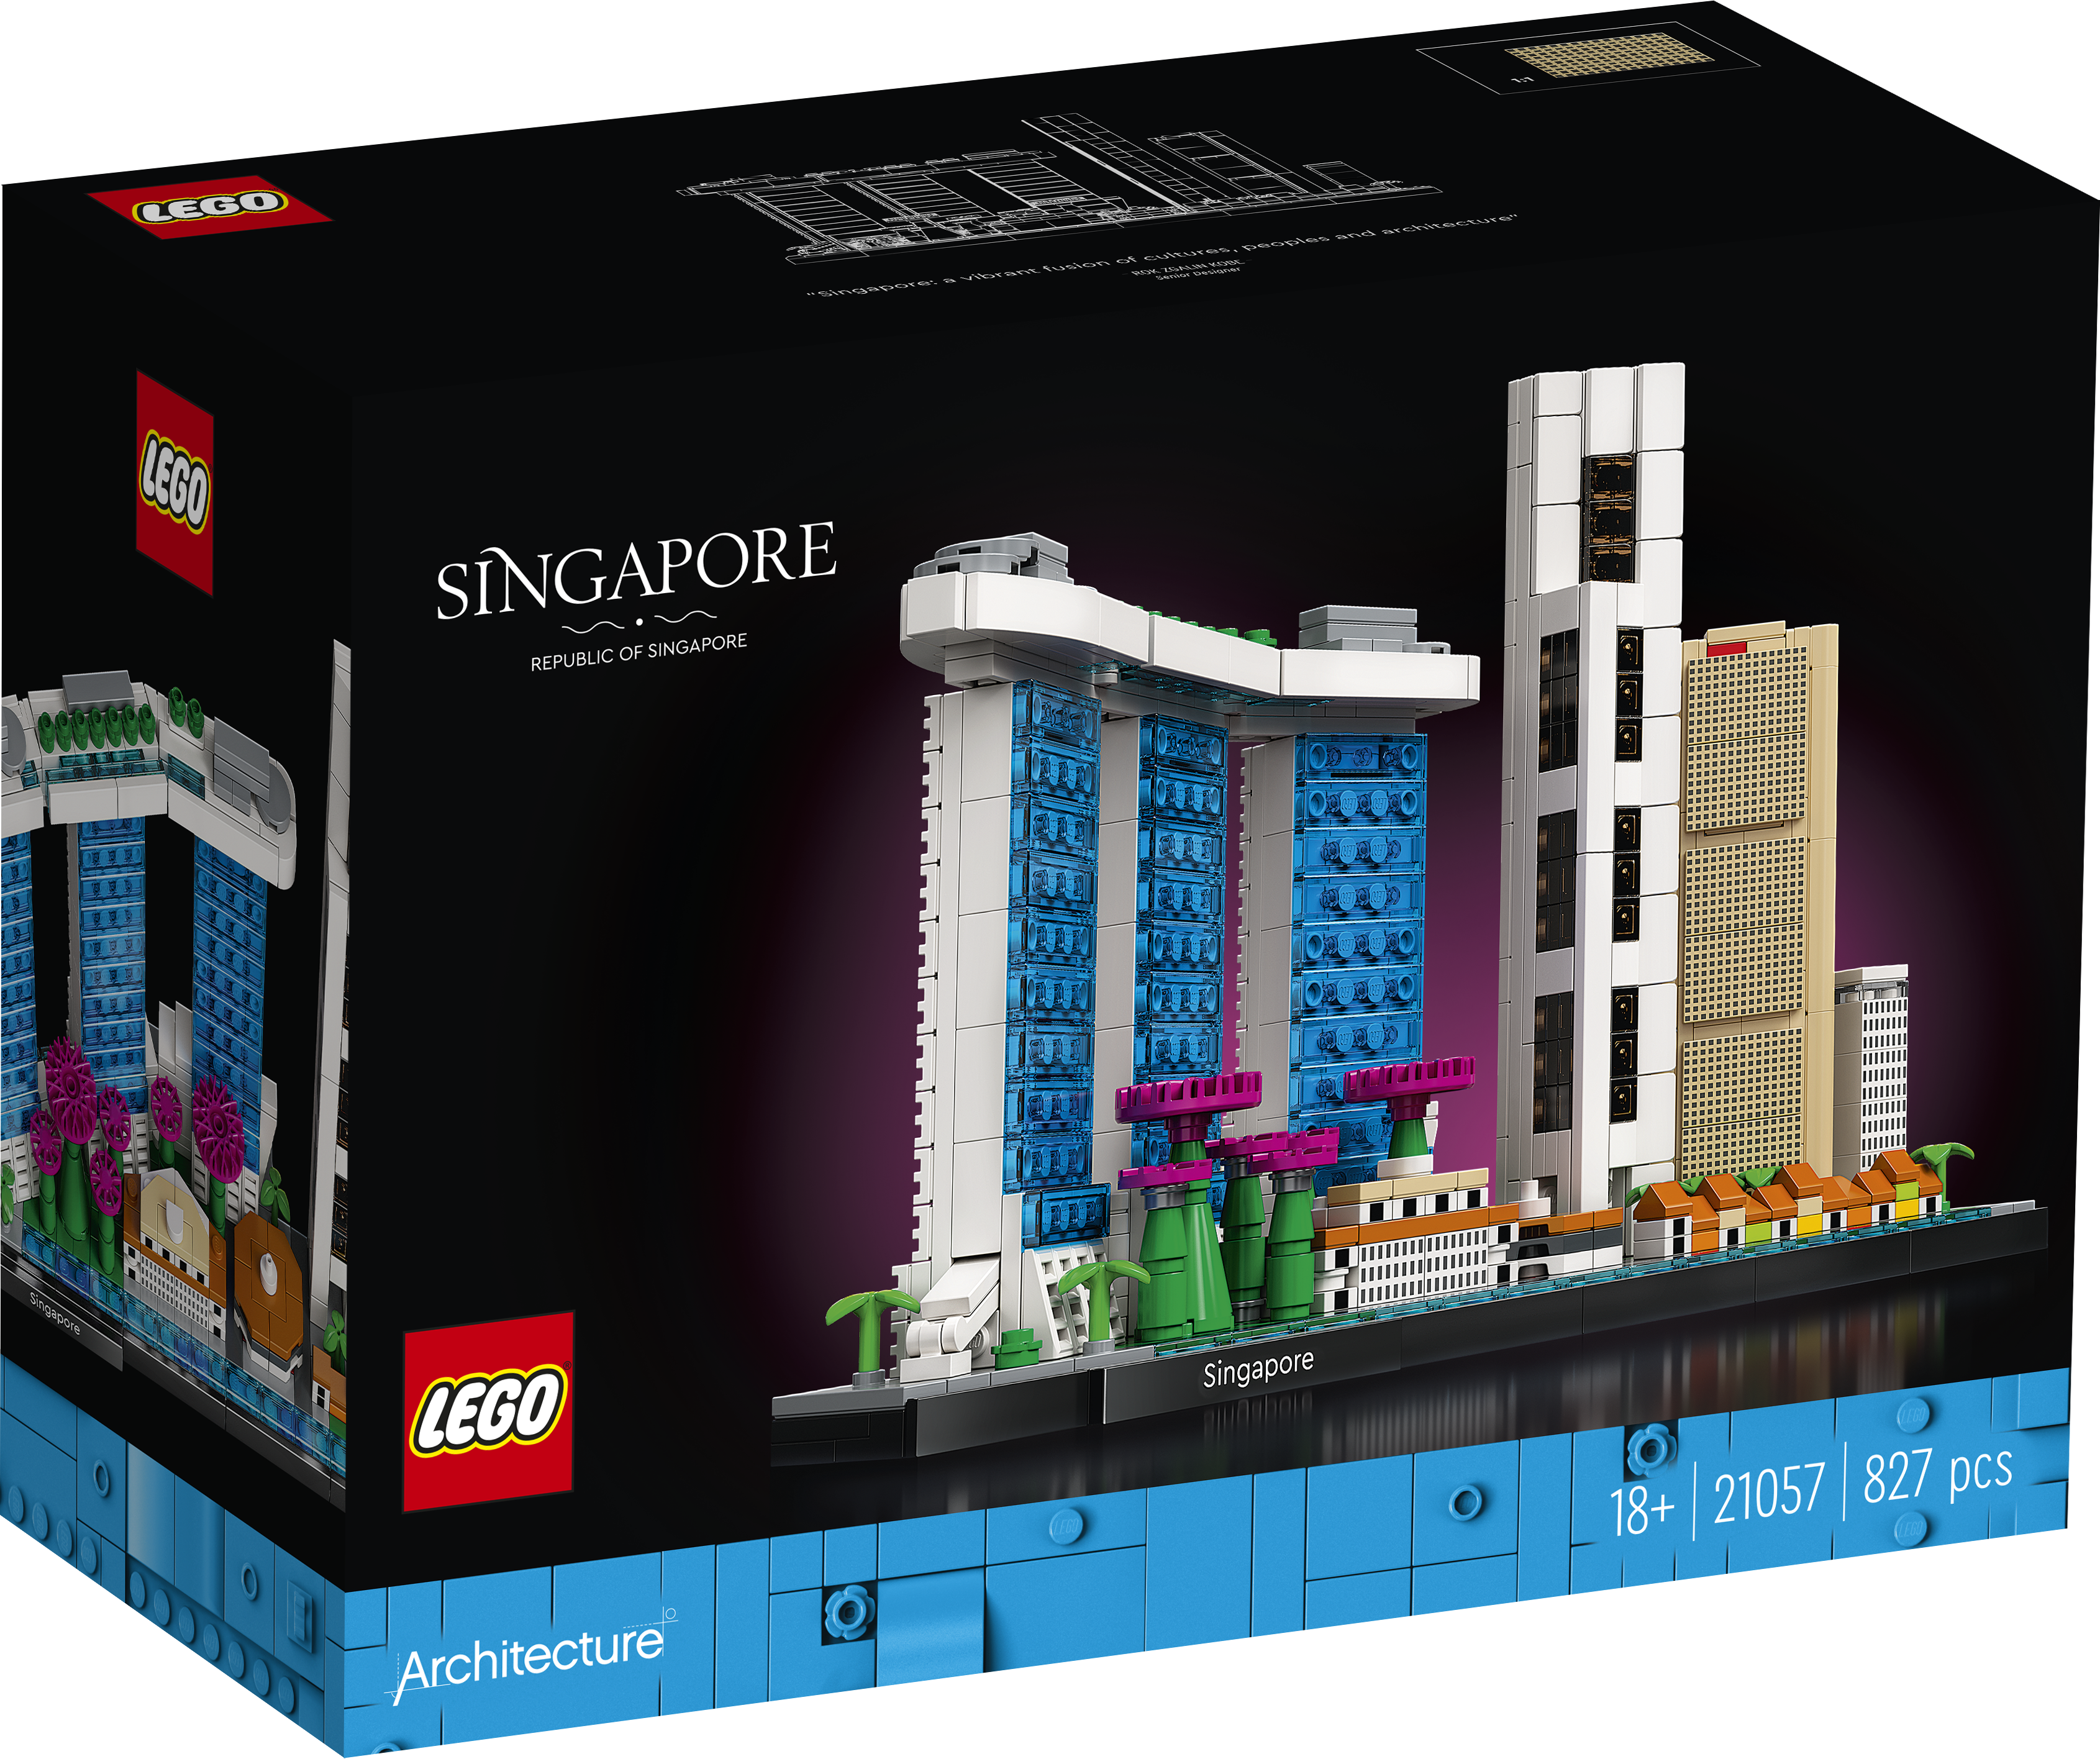  Architecture Singapore - 21057